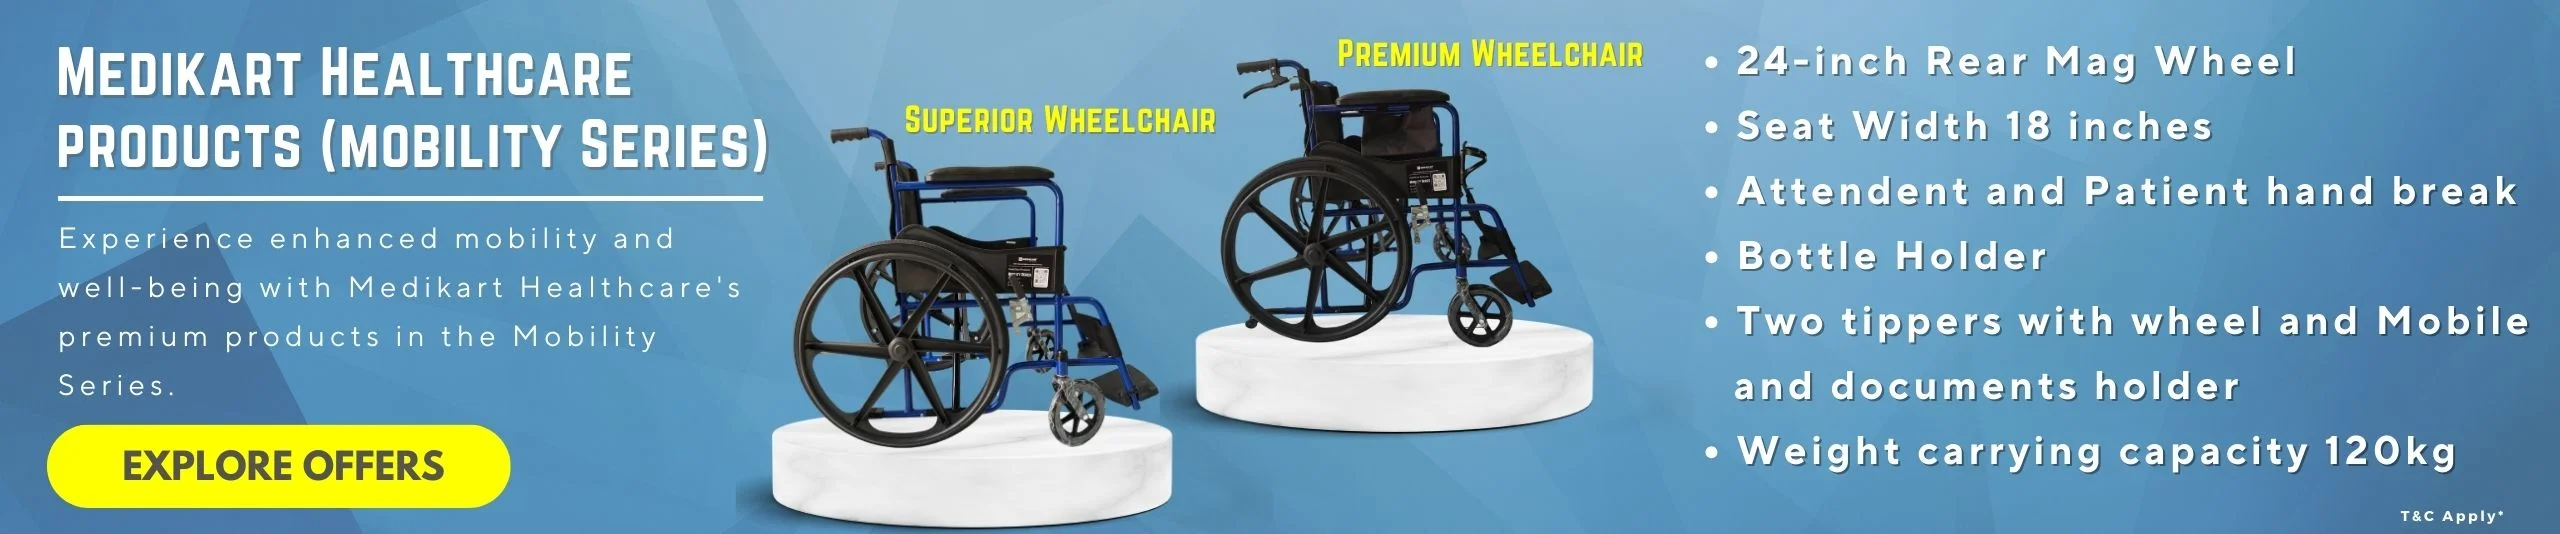 Medikart Healthcare products (mobility Series) Desktop